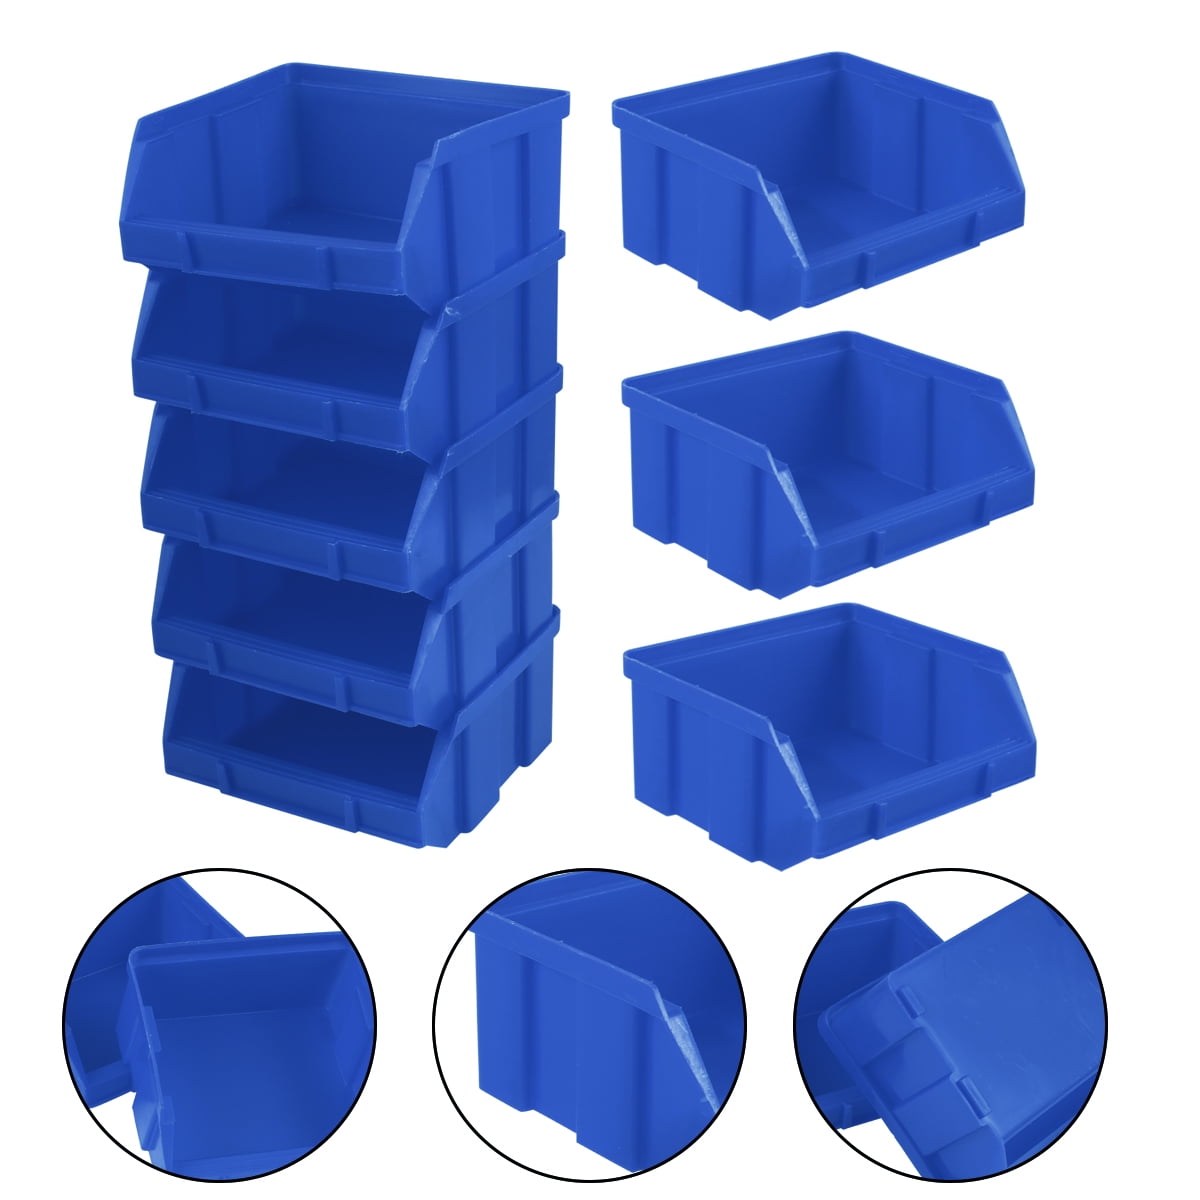 Warehouse Workshop Organization Plastic Stackable Storage Bins for